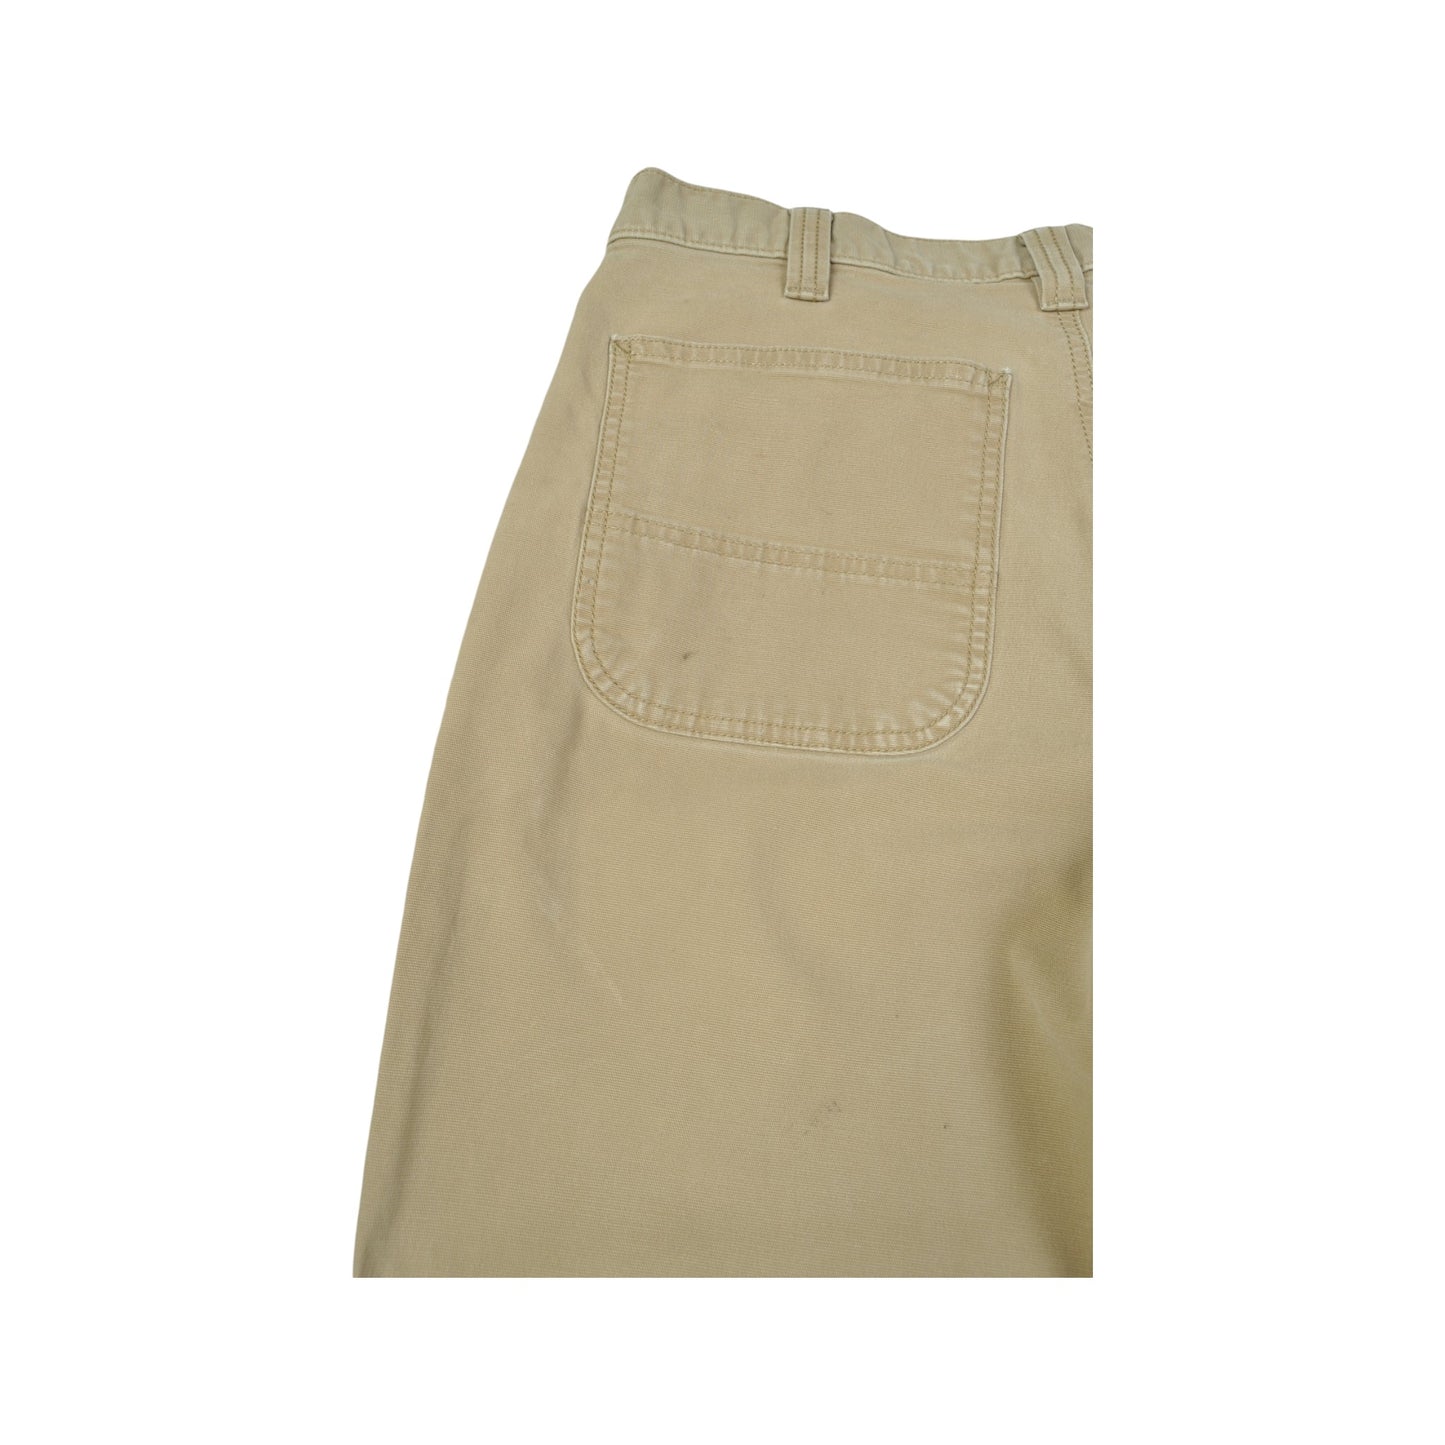 Vintage Carhartt Carpenter Pants Tan W33 L30